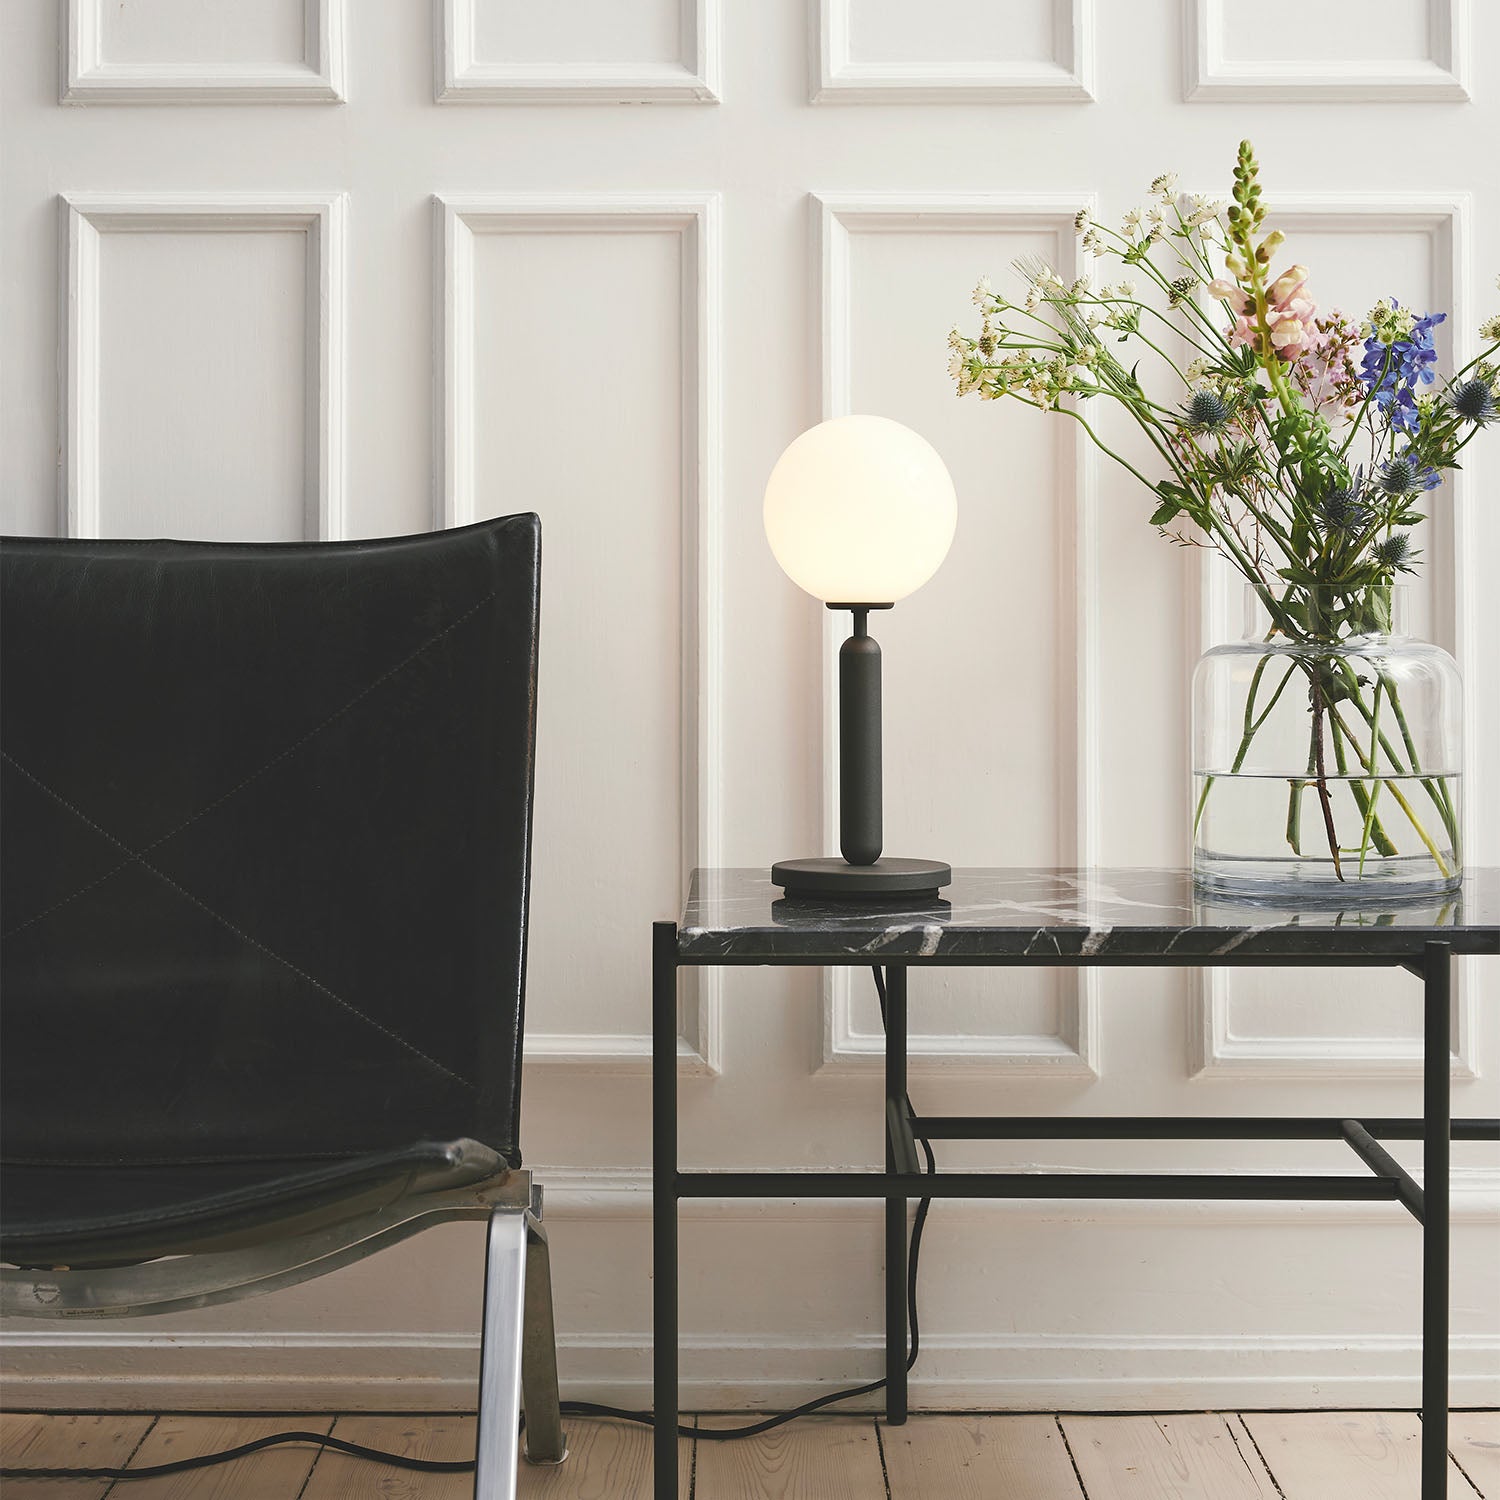 MIIRA Opal Table - Lampe à poser élégante haut de gamme bureau